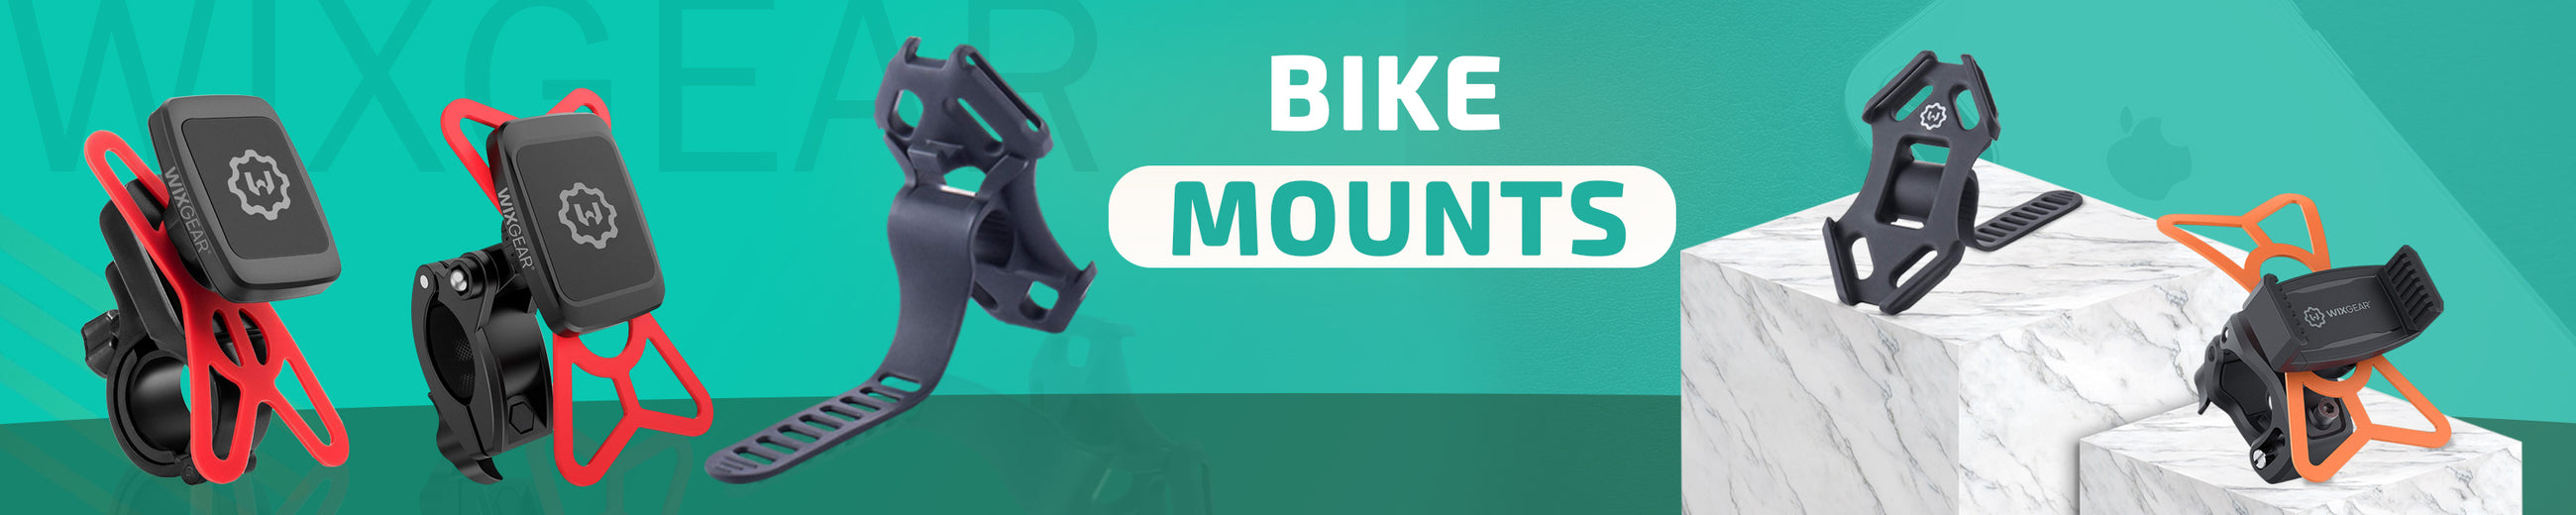 Bike Mounts